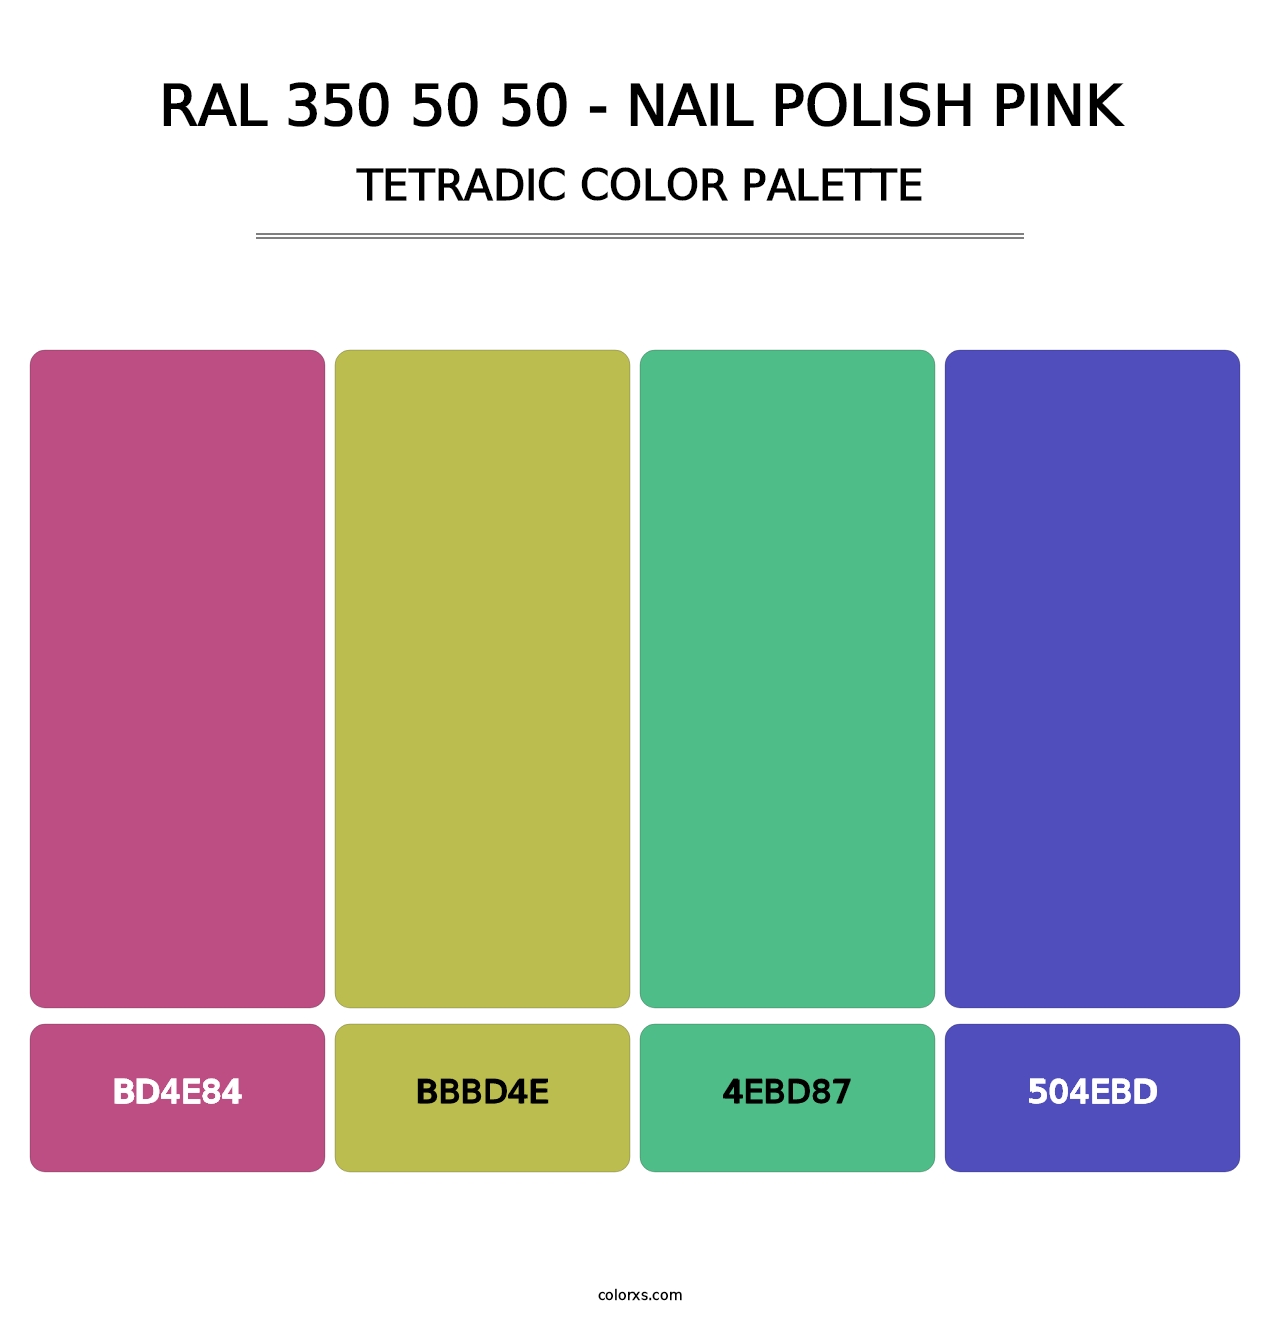 RAL 350 50 50 - Nail Polish Pink - Tetradic Color Palette